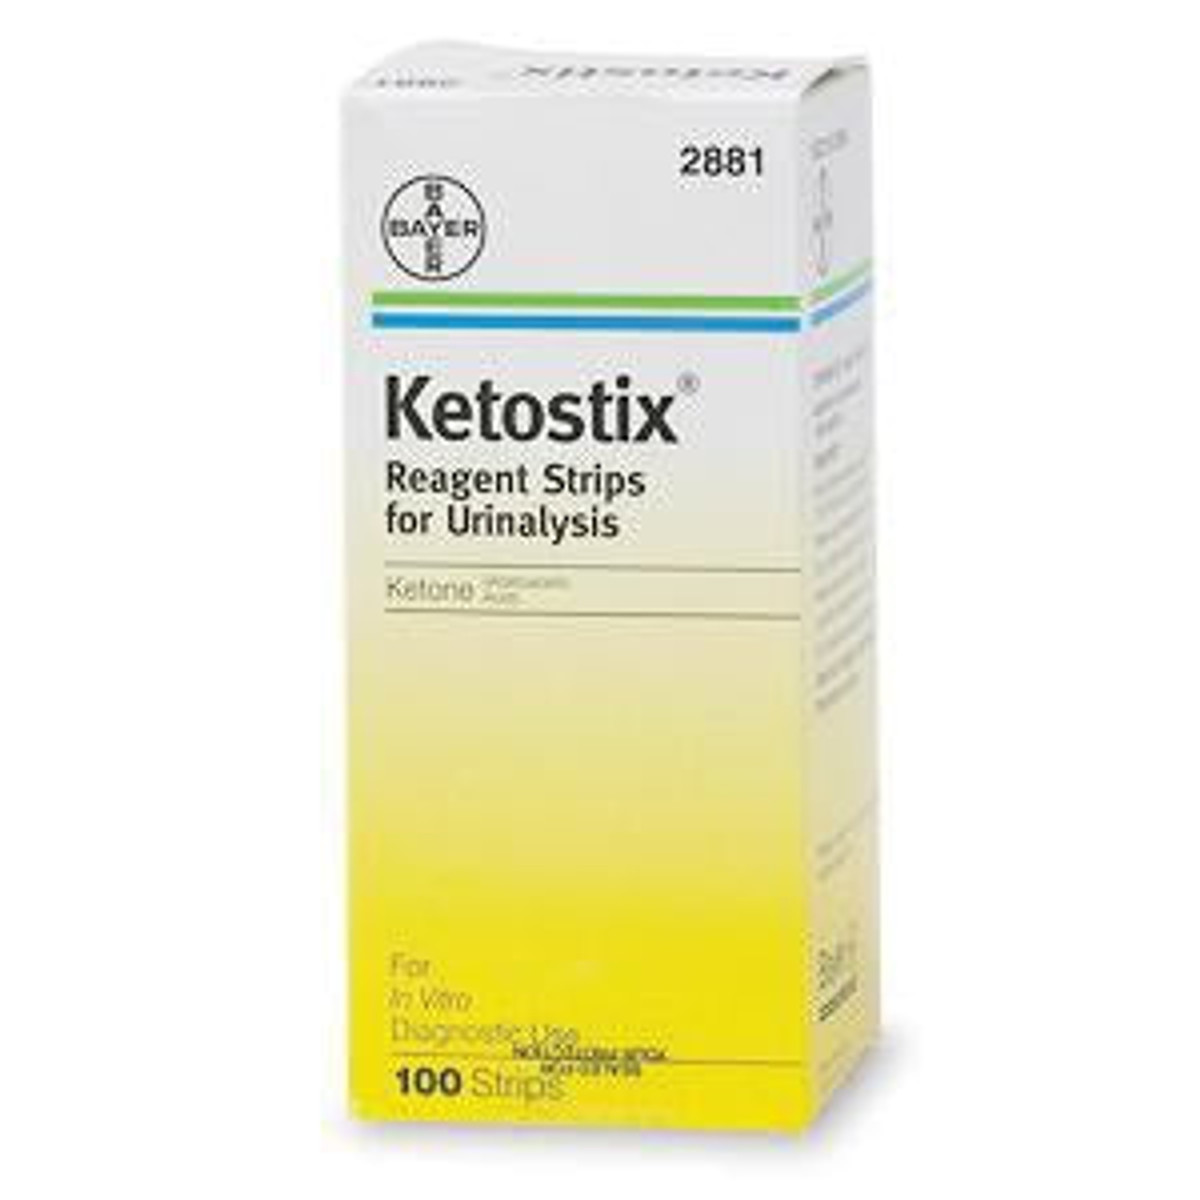 Ascensia Ketostix Reagent Strips For Urinalysis